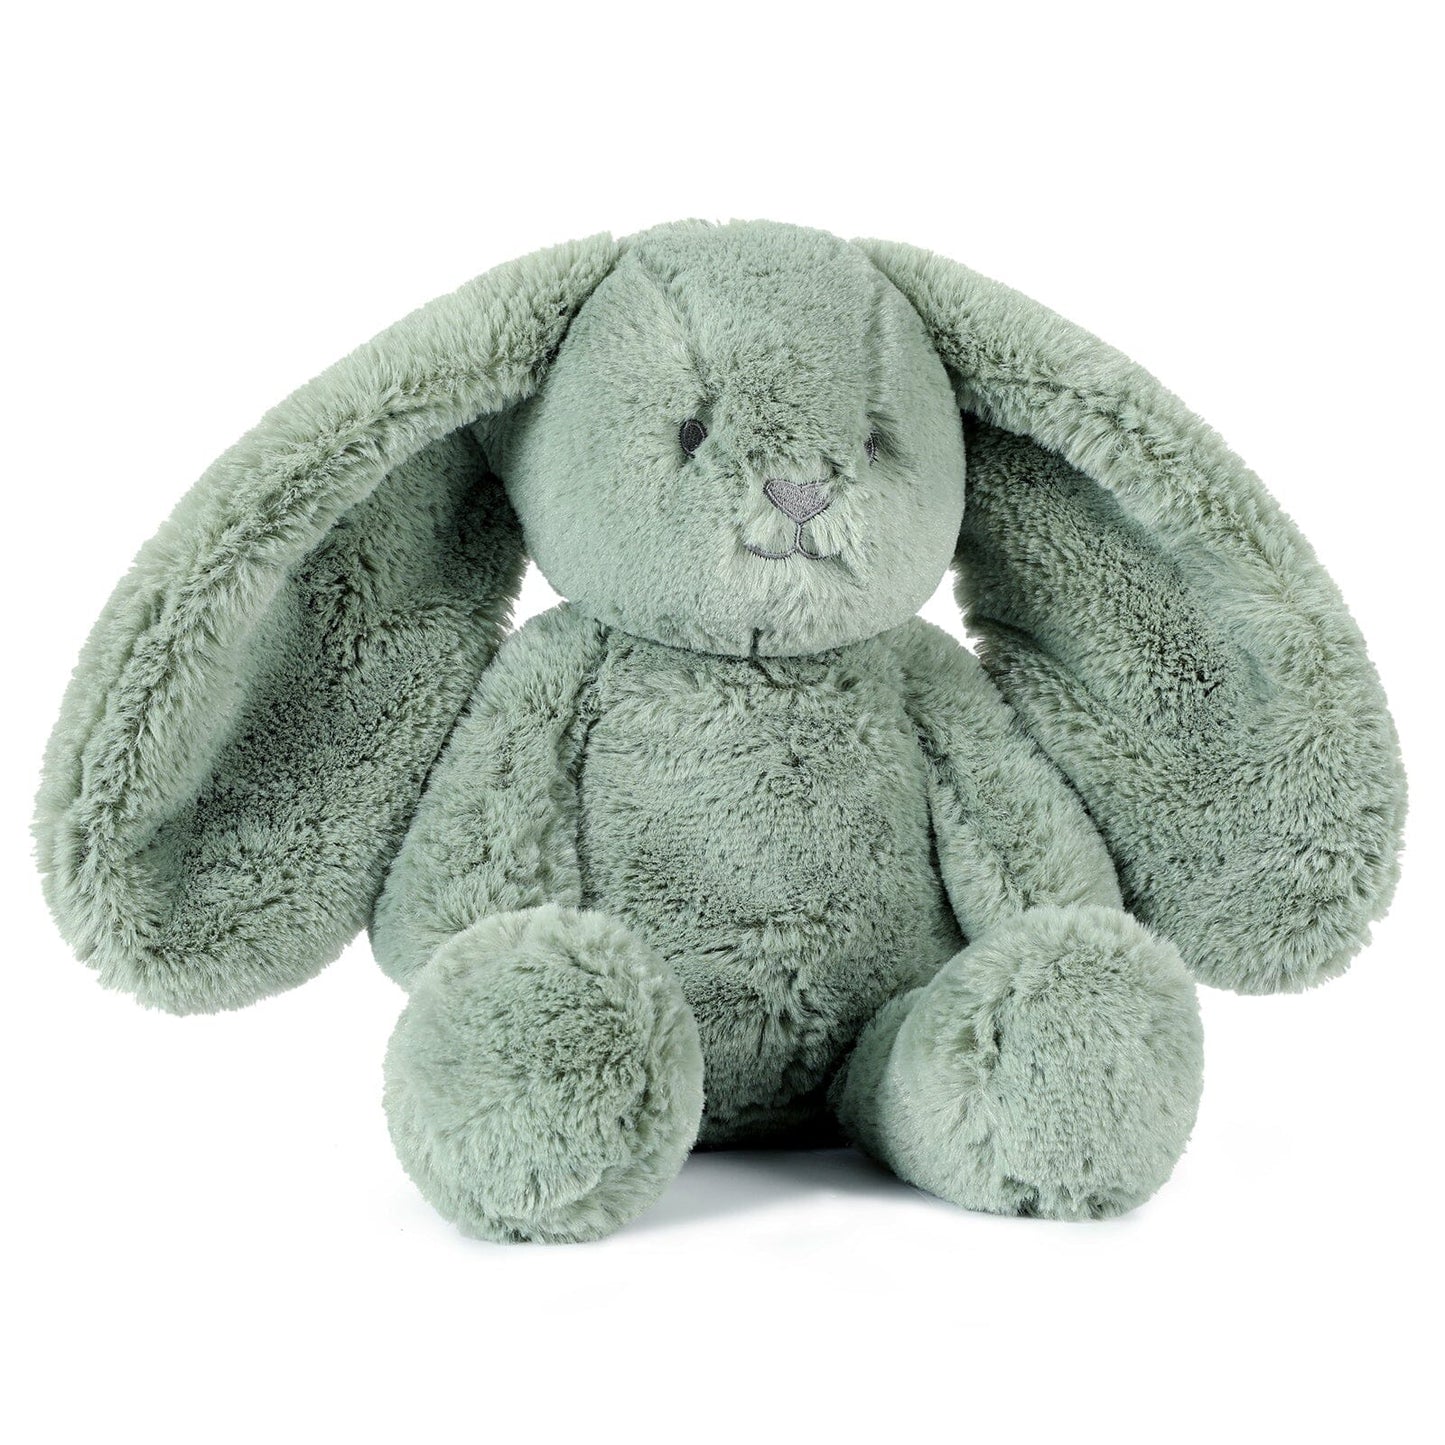 OB Sage Bunny Soft Toy